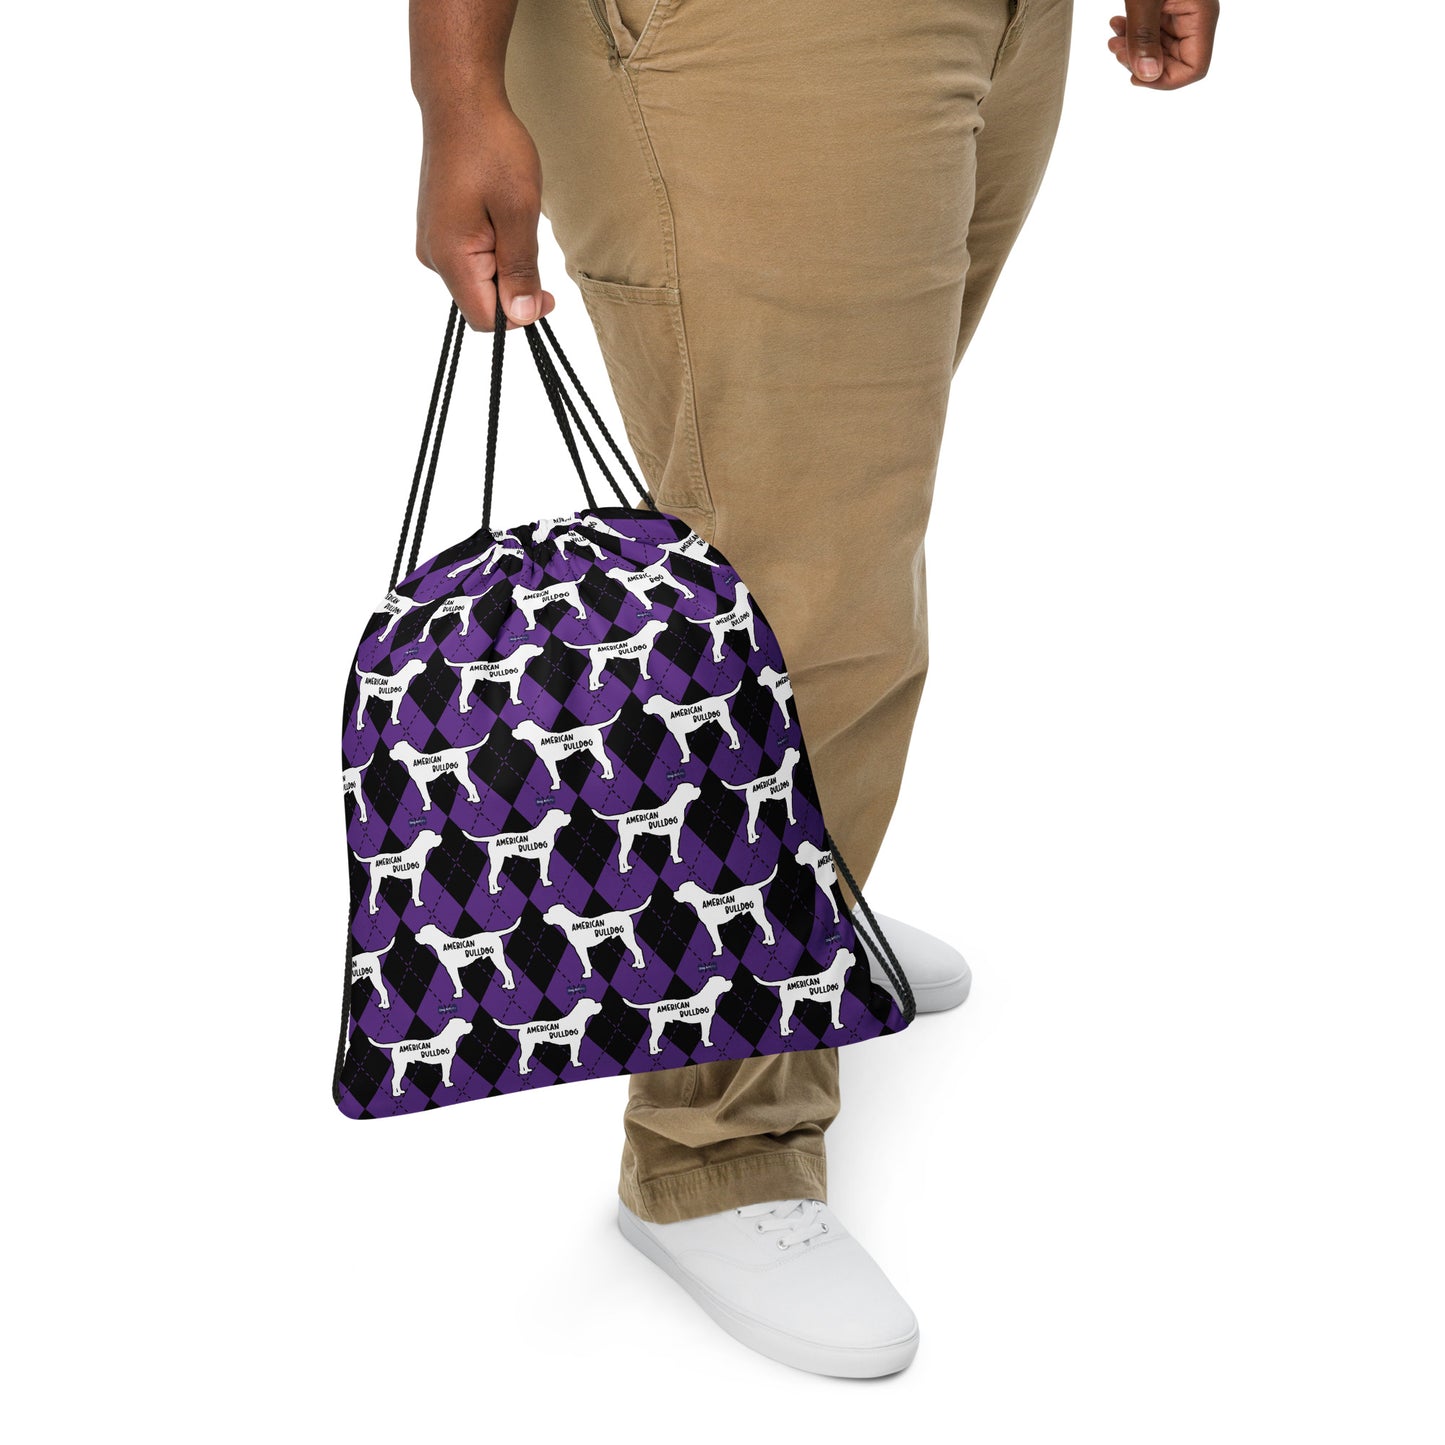 American Bulldog Argyle Purple and Black Drawstring bag